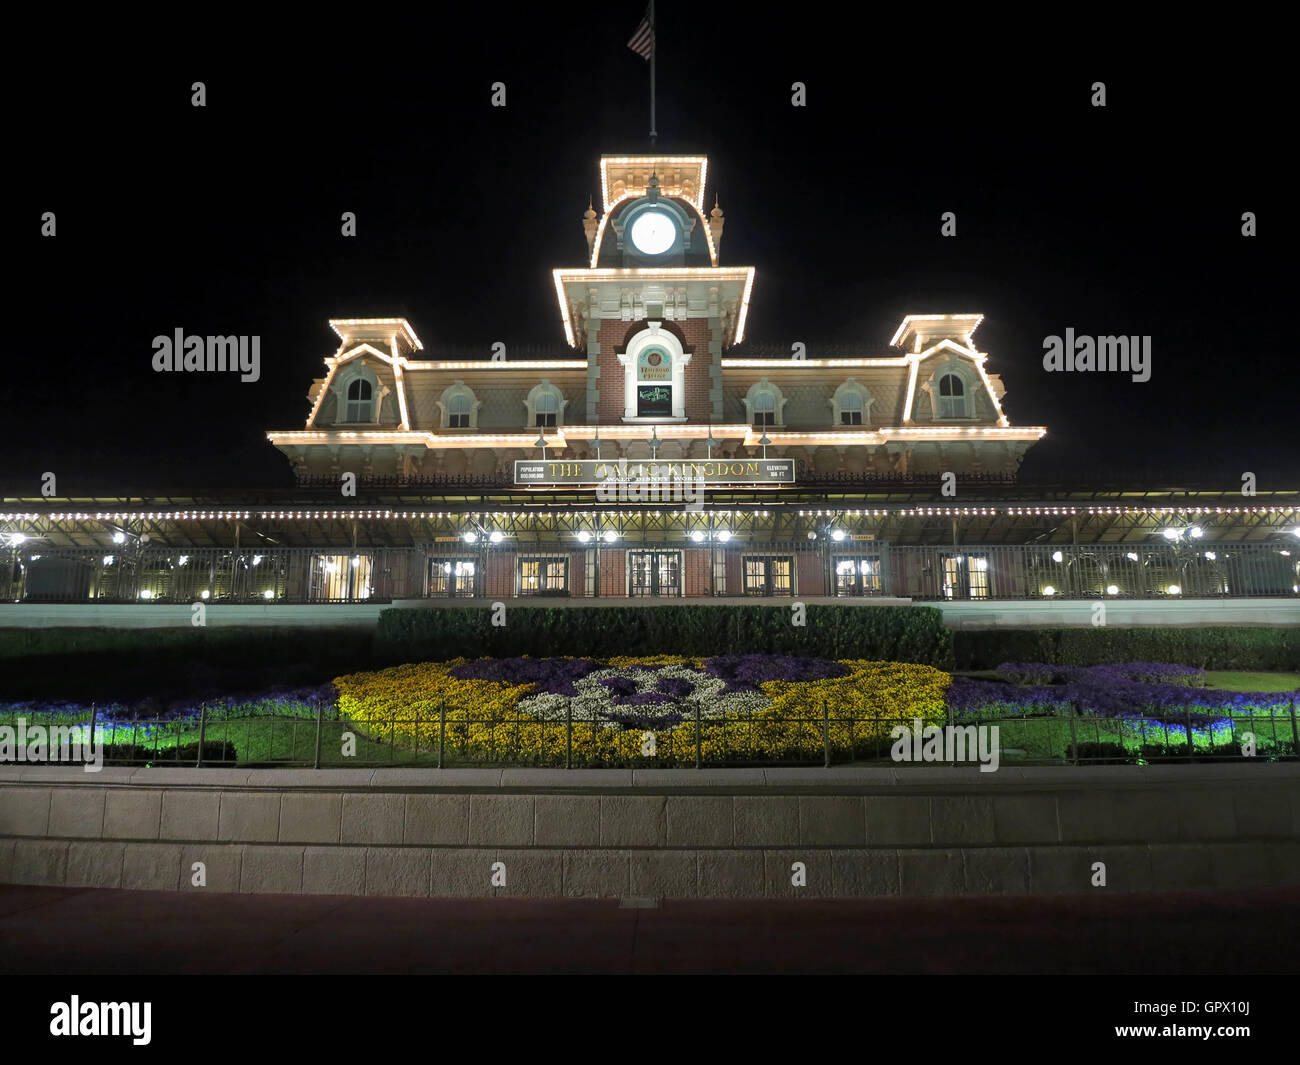 Disney Train Magic Kingdom, Walt Disney World Resort, Florida Stock Photo -  Alamy